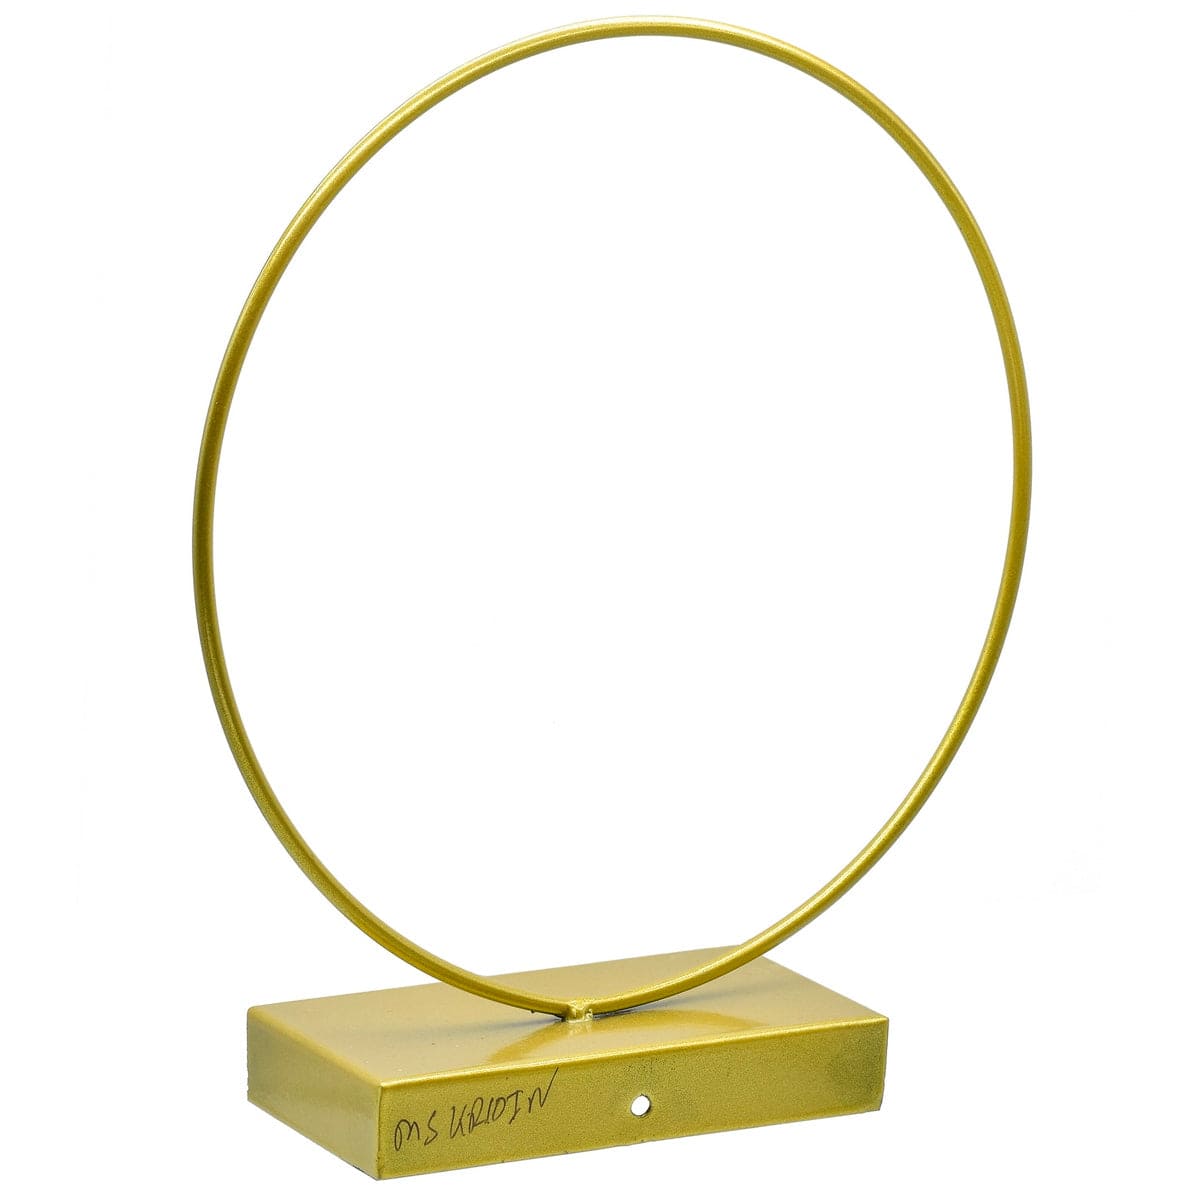 jags-mumbai Easel Elegant Gold Round Metal Stand - 10 Inch Diameter, Contain 1 Unit